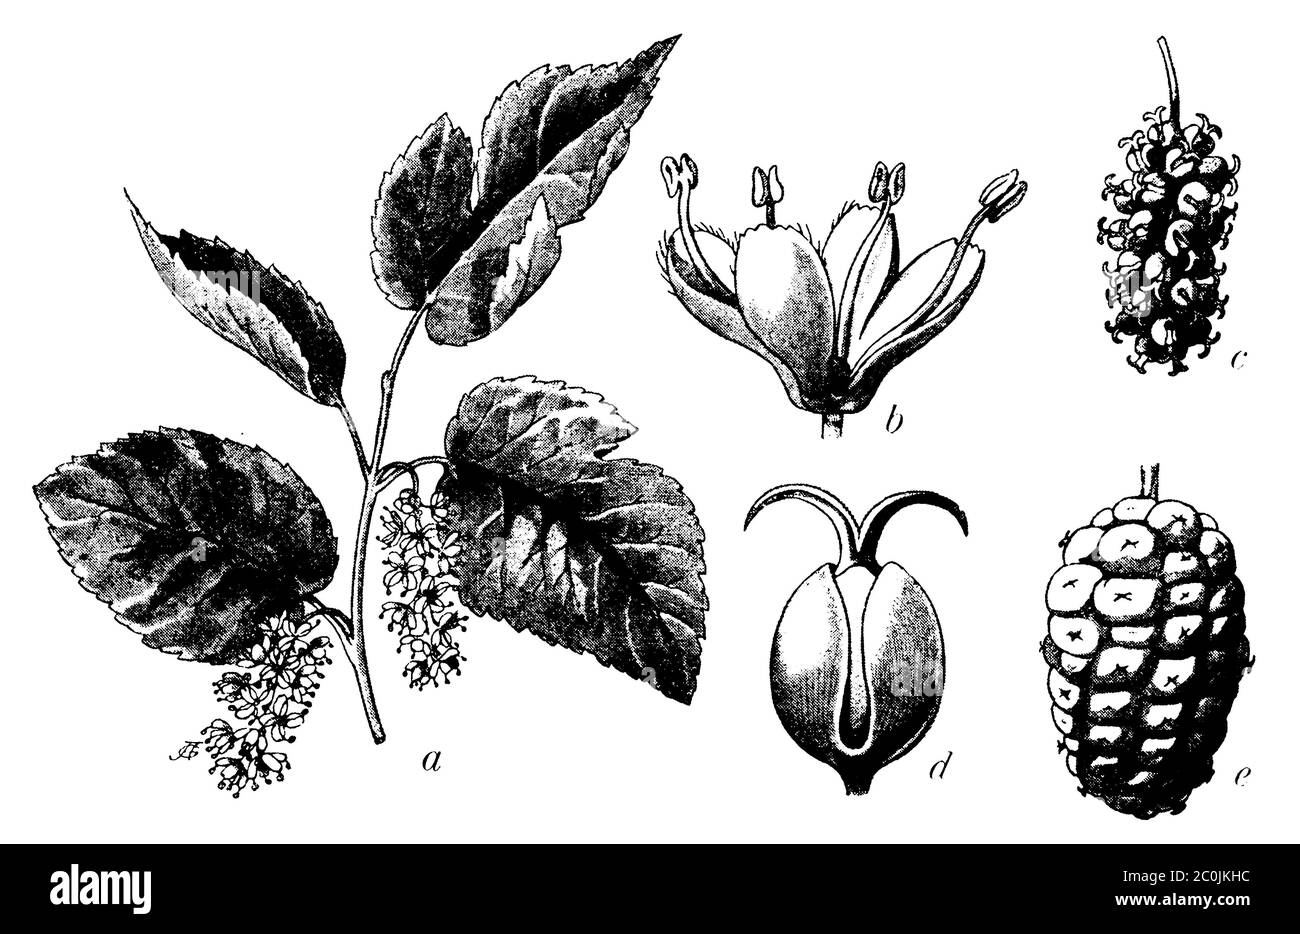 Gelso bianco / Morus alba / Weiße Maulbeere (libro di botanica, 1902) Foto Stock